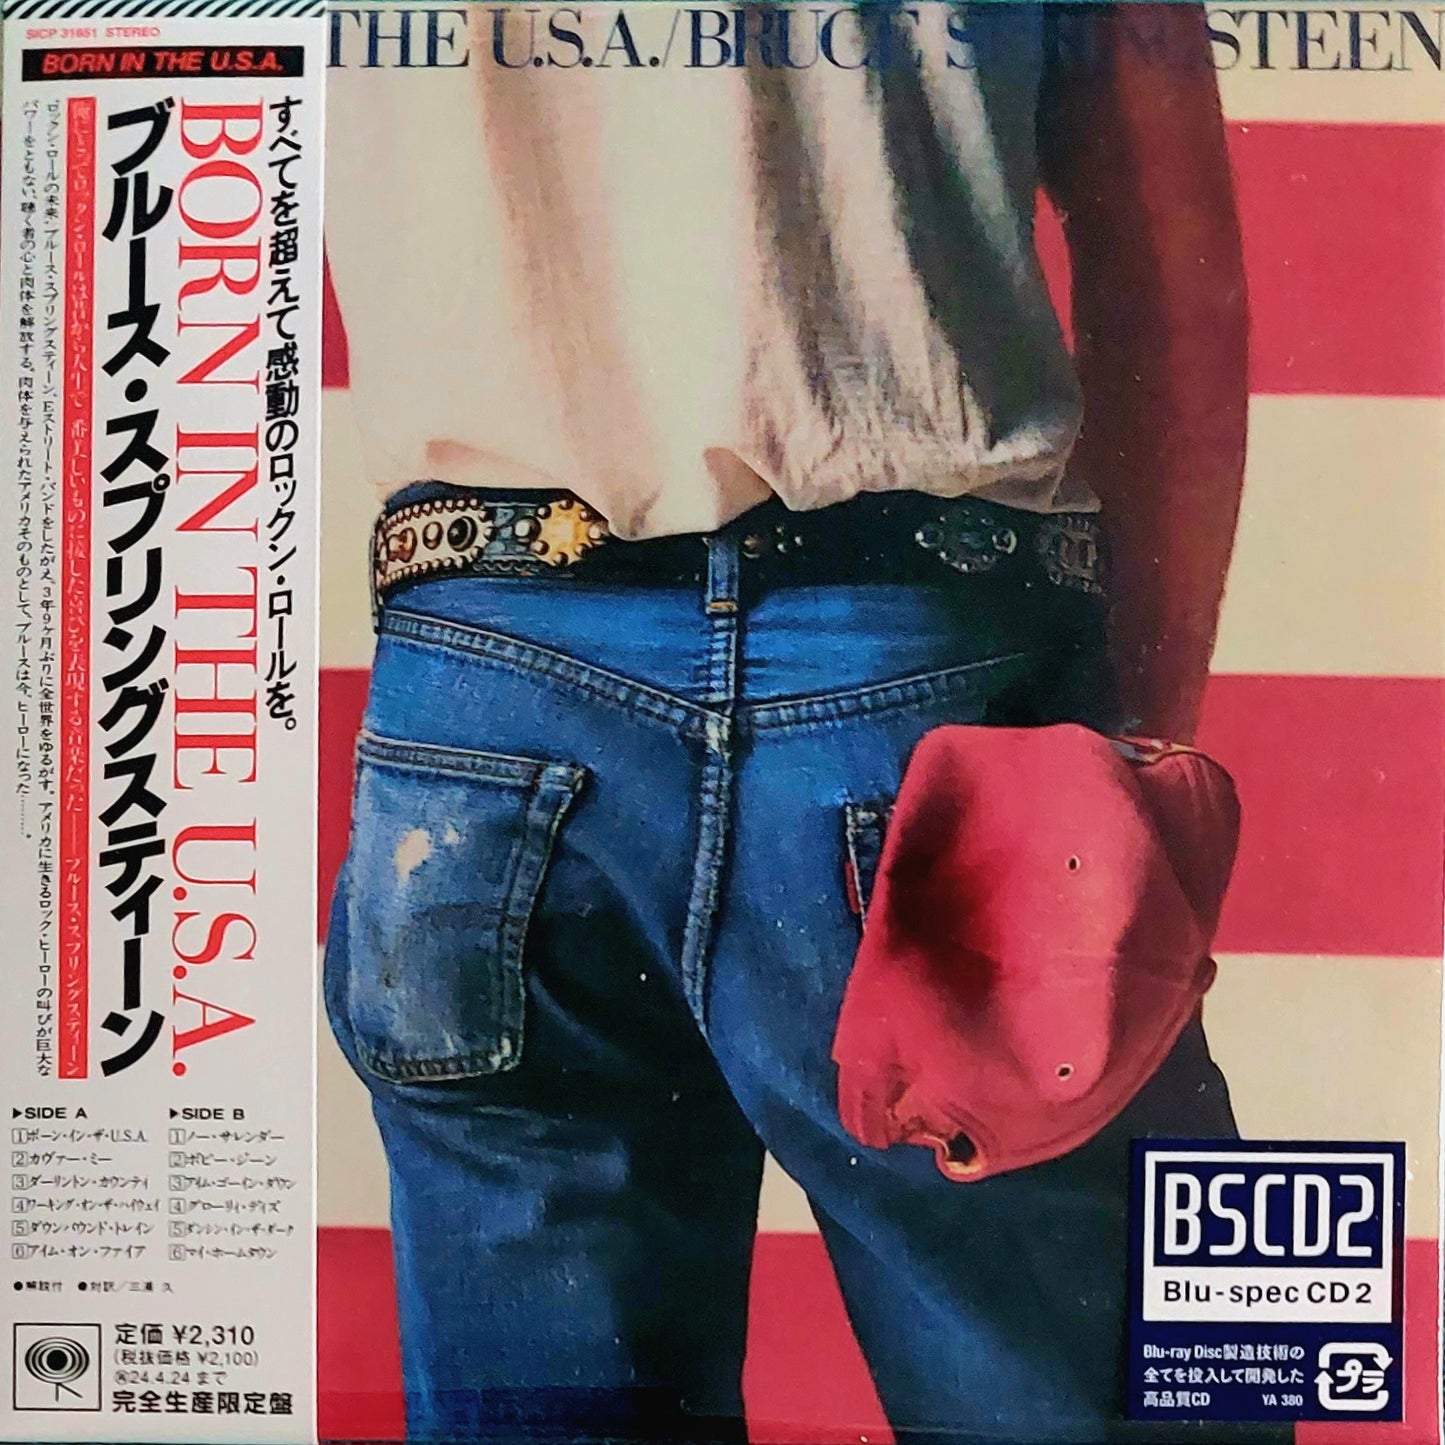 Bruce_Springsteen_Born_In_USA_Japanese_Blu-spec_CD2_CD_Album